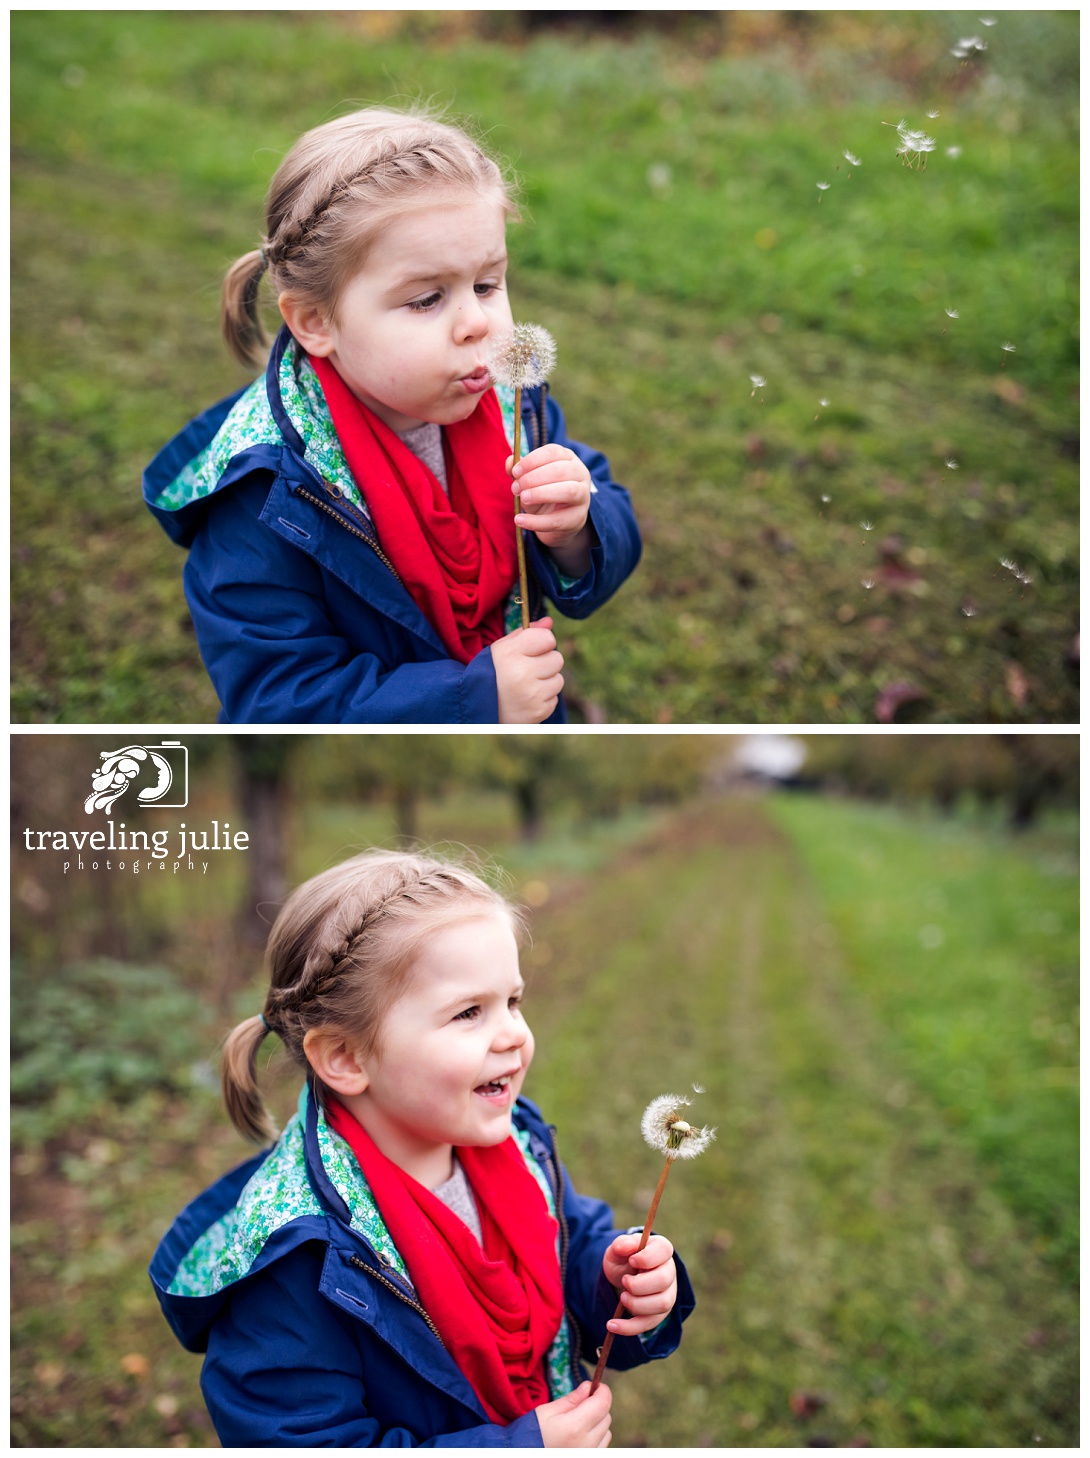 Adorable girl blowing dandelions